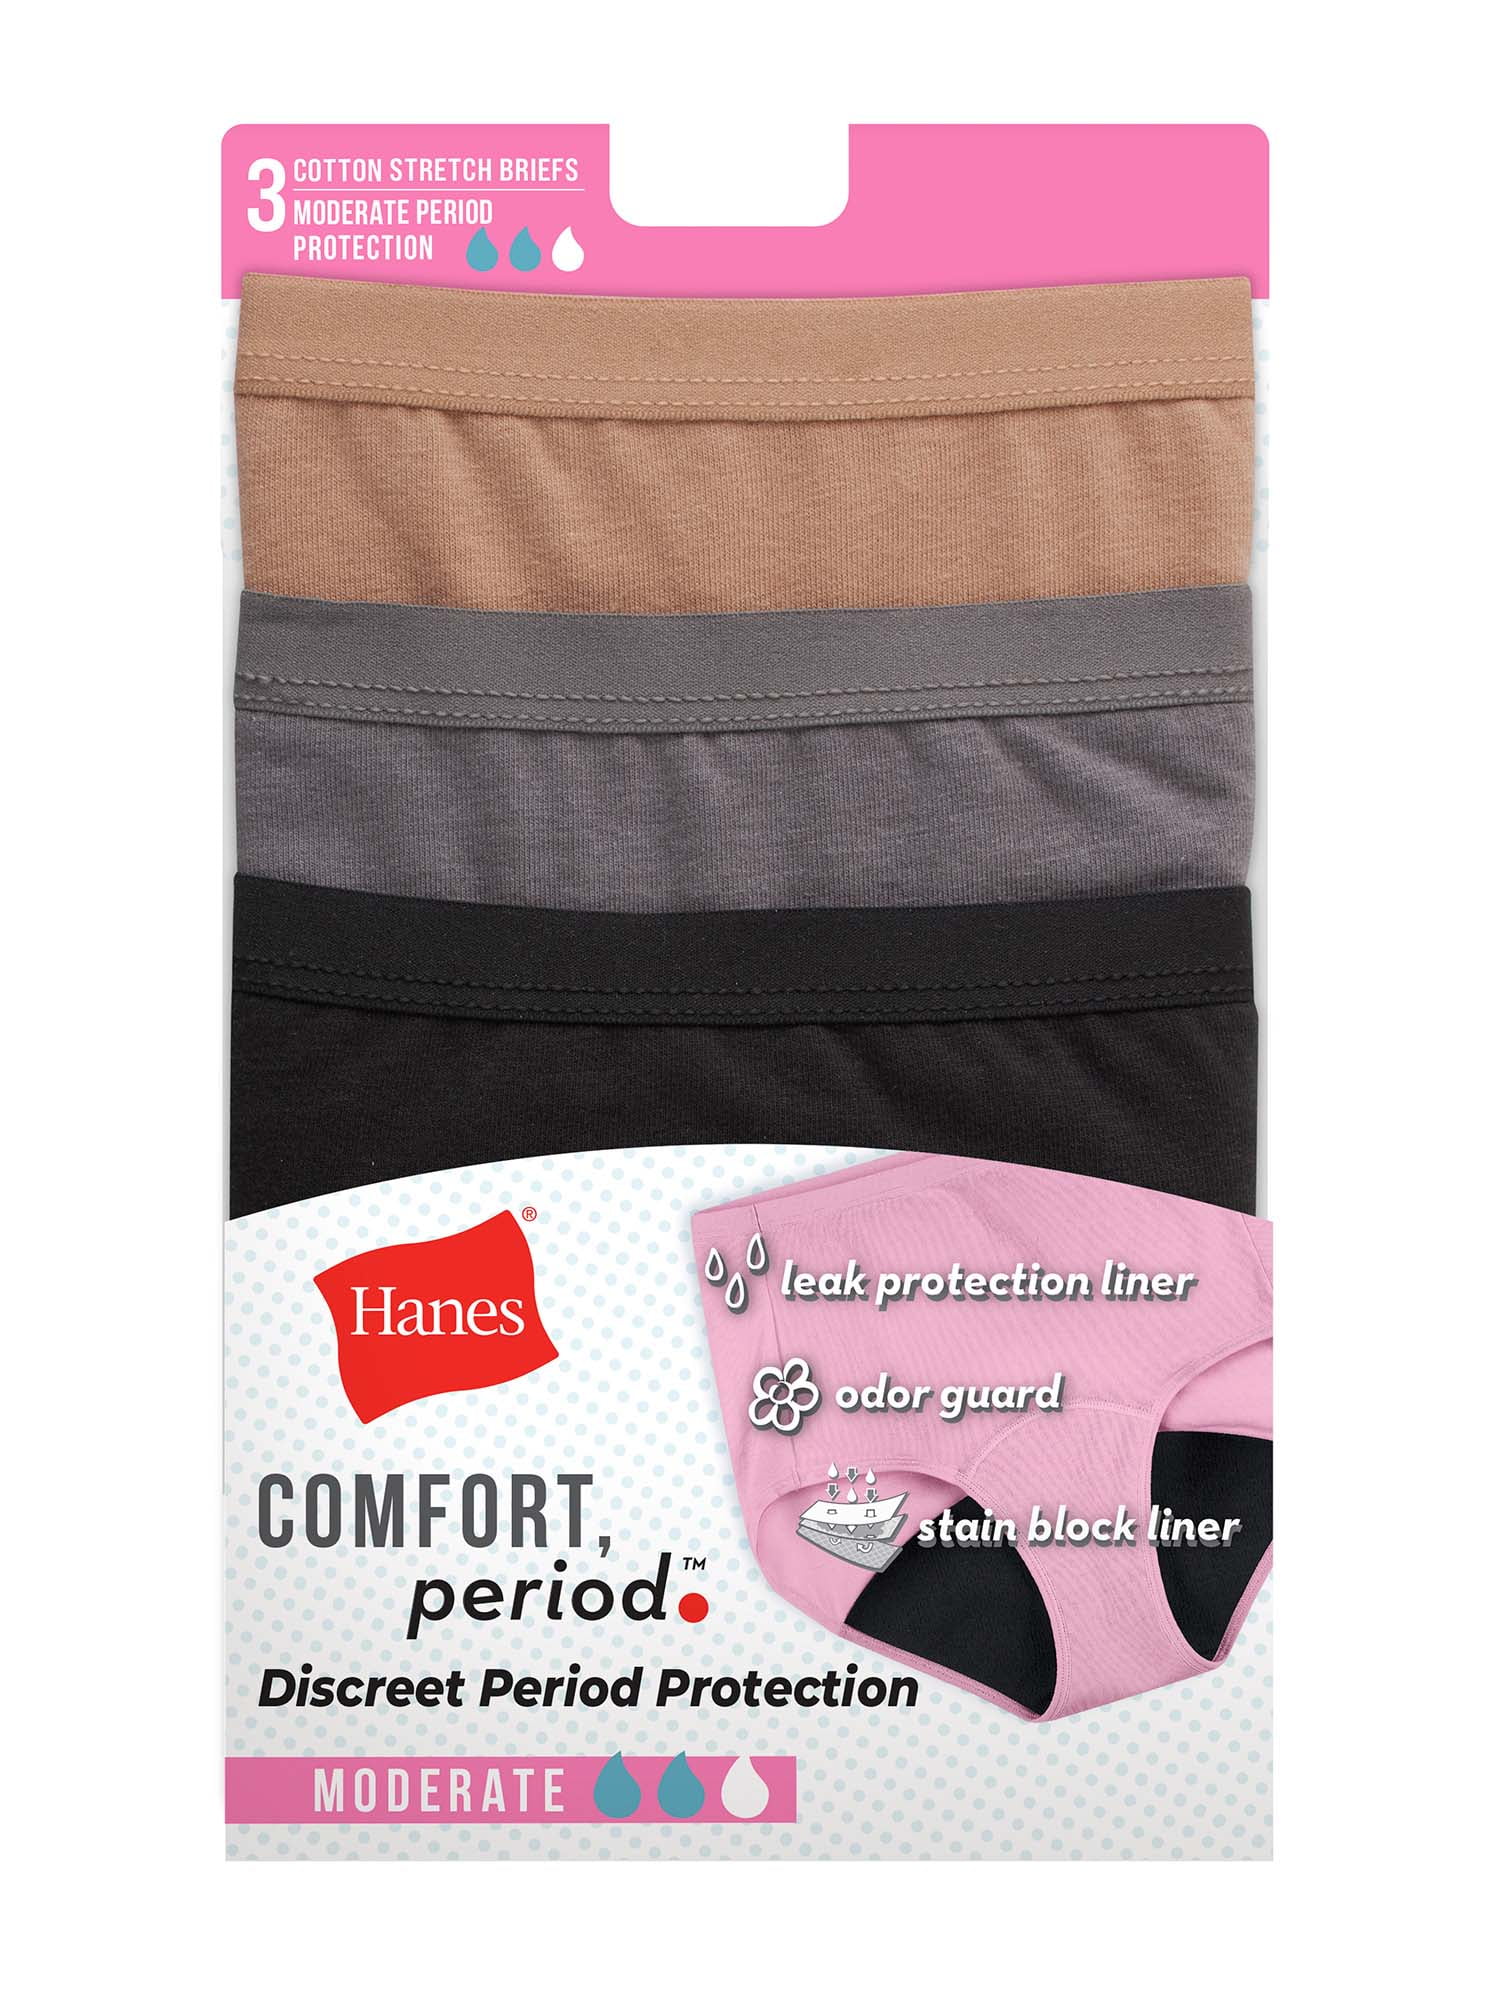 Hanes Women's Comfort, Period Moderate Leak Protection Brief Underwear, 3  Pack 